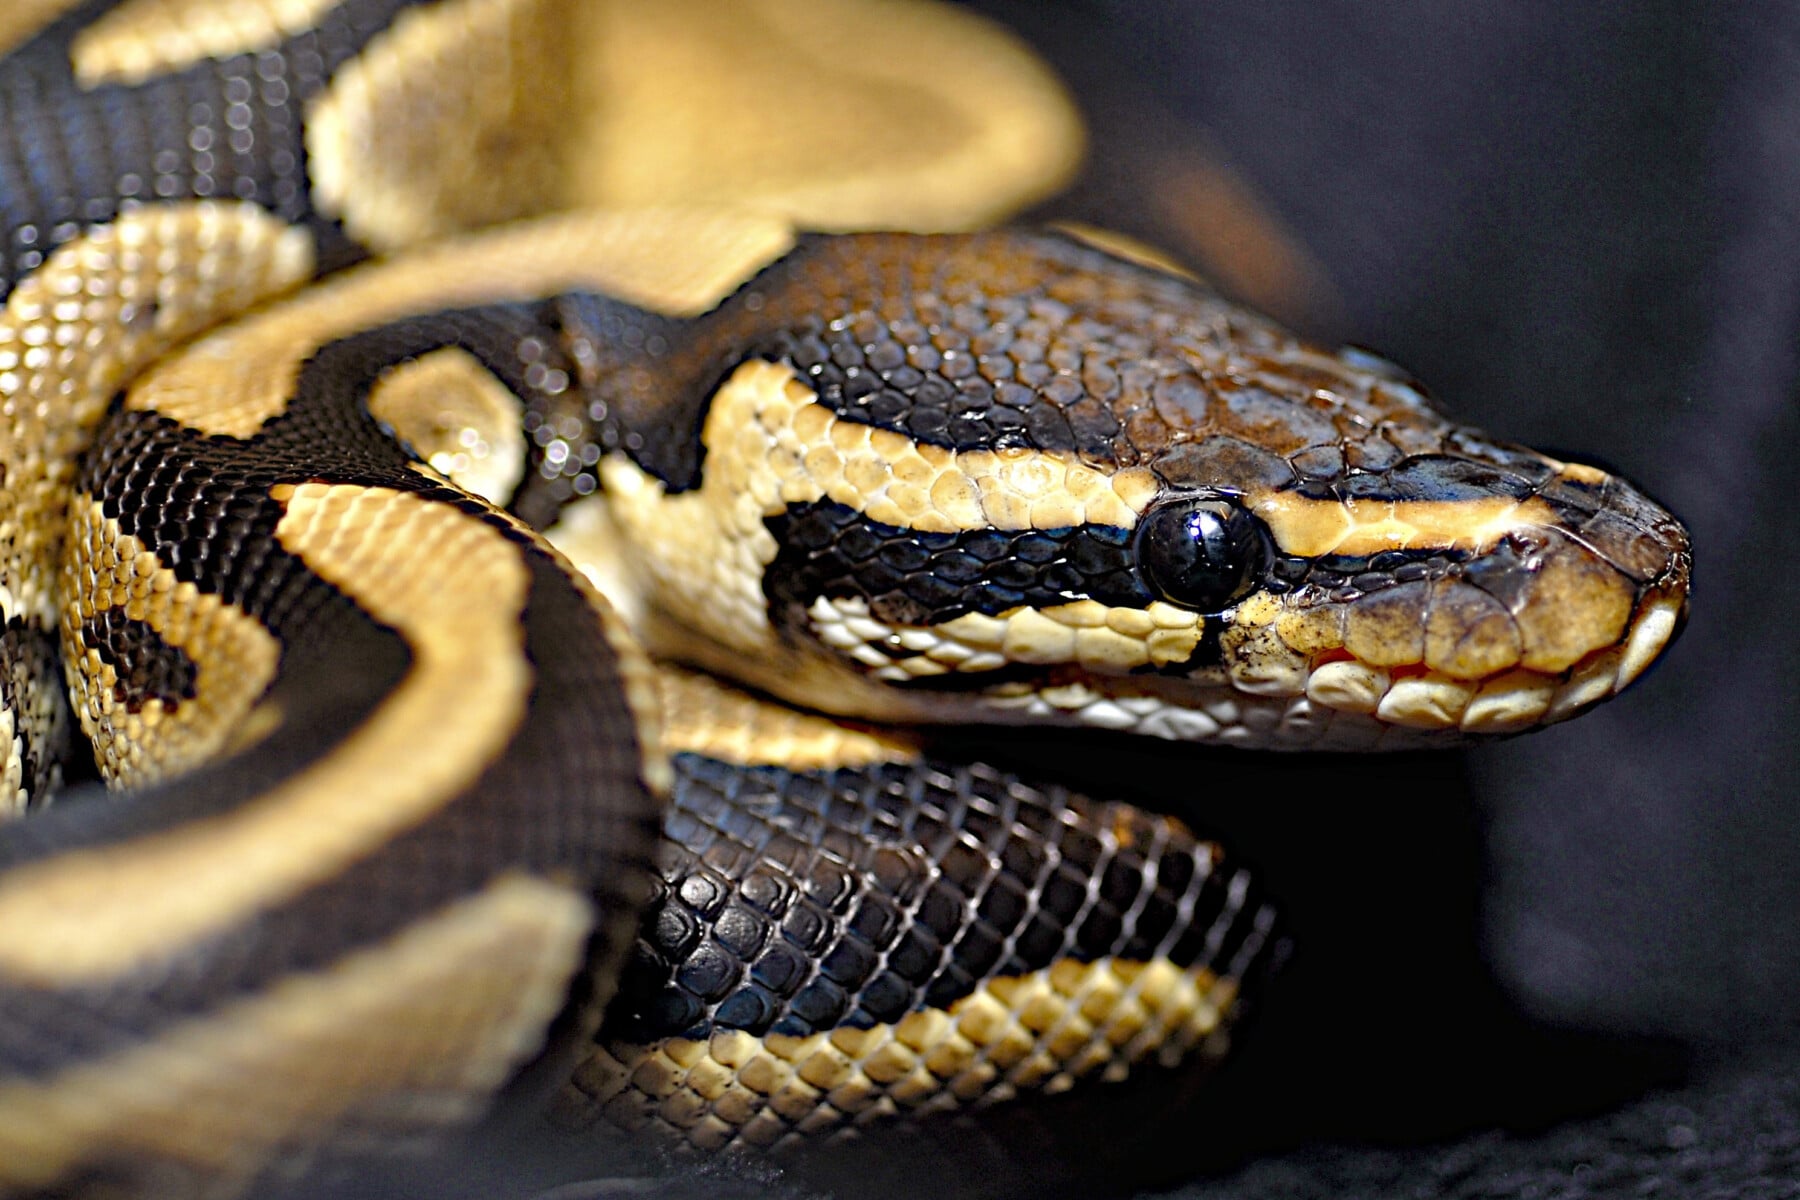 Snake venom therapy